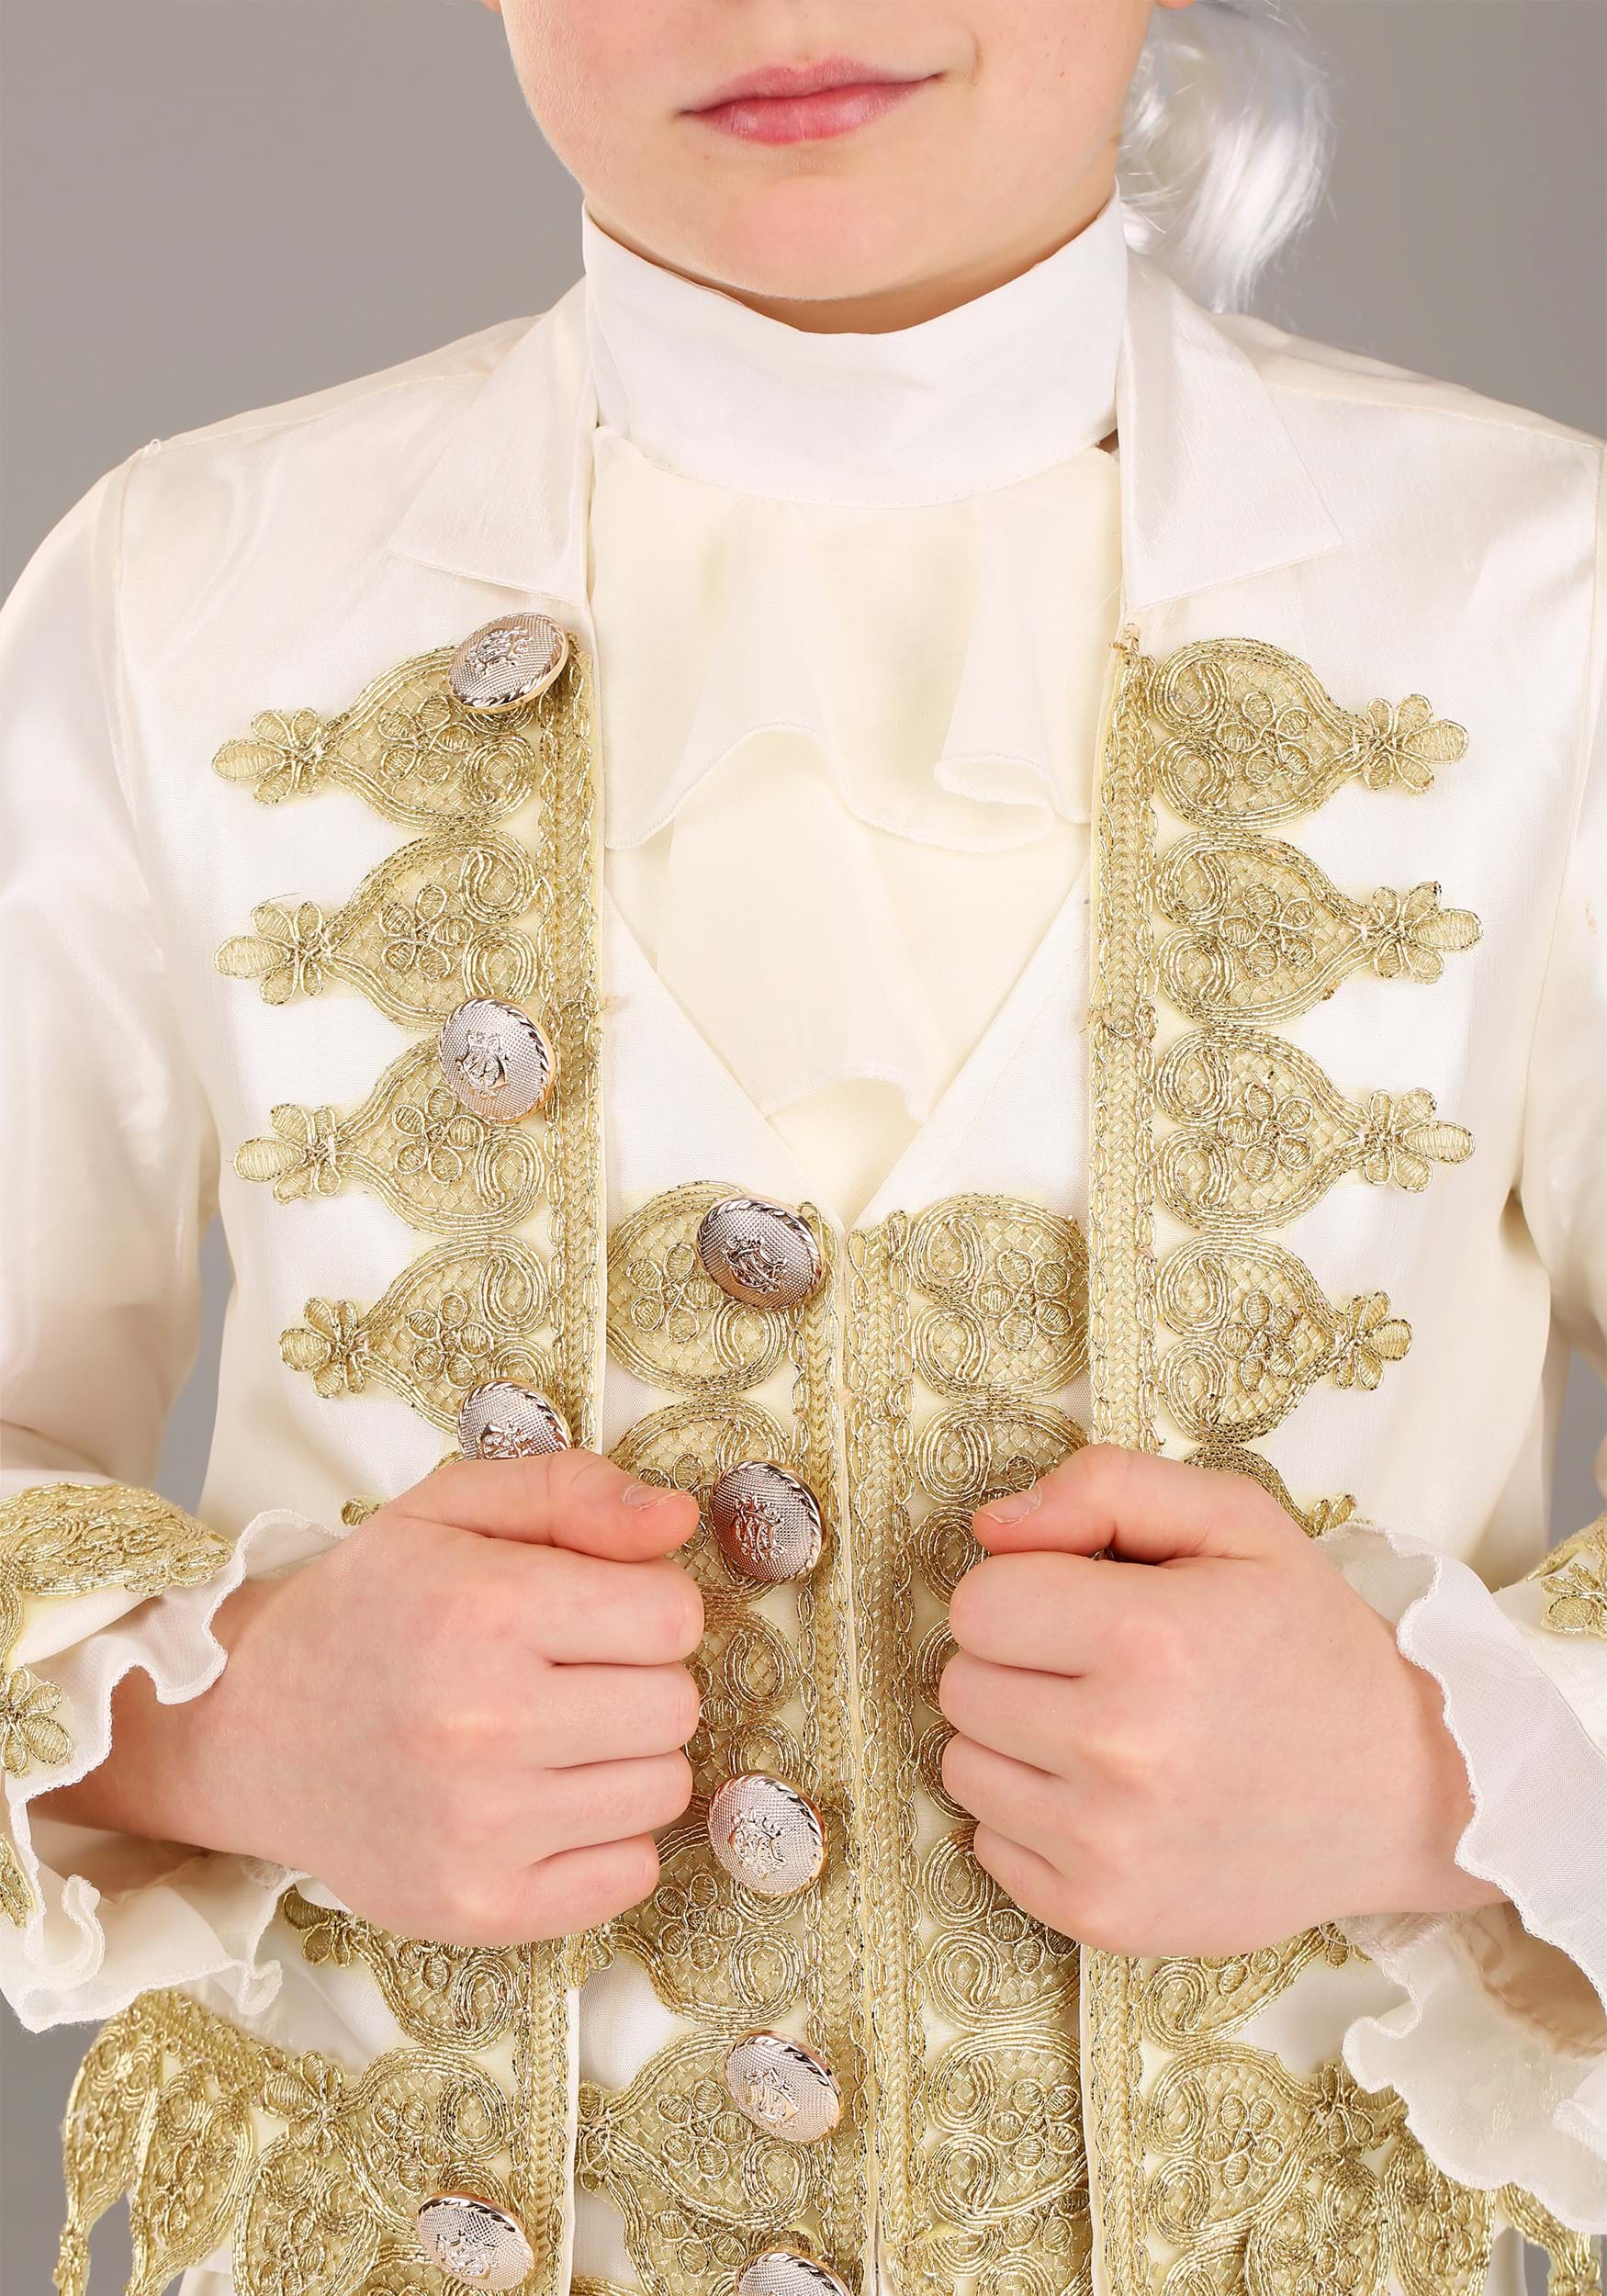 Louis XVI Kid's Costume